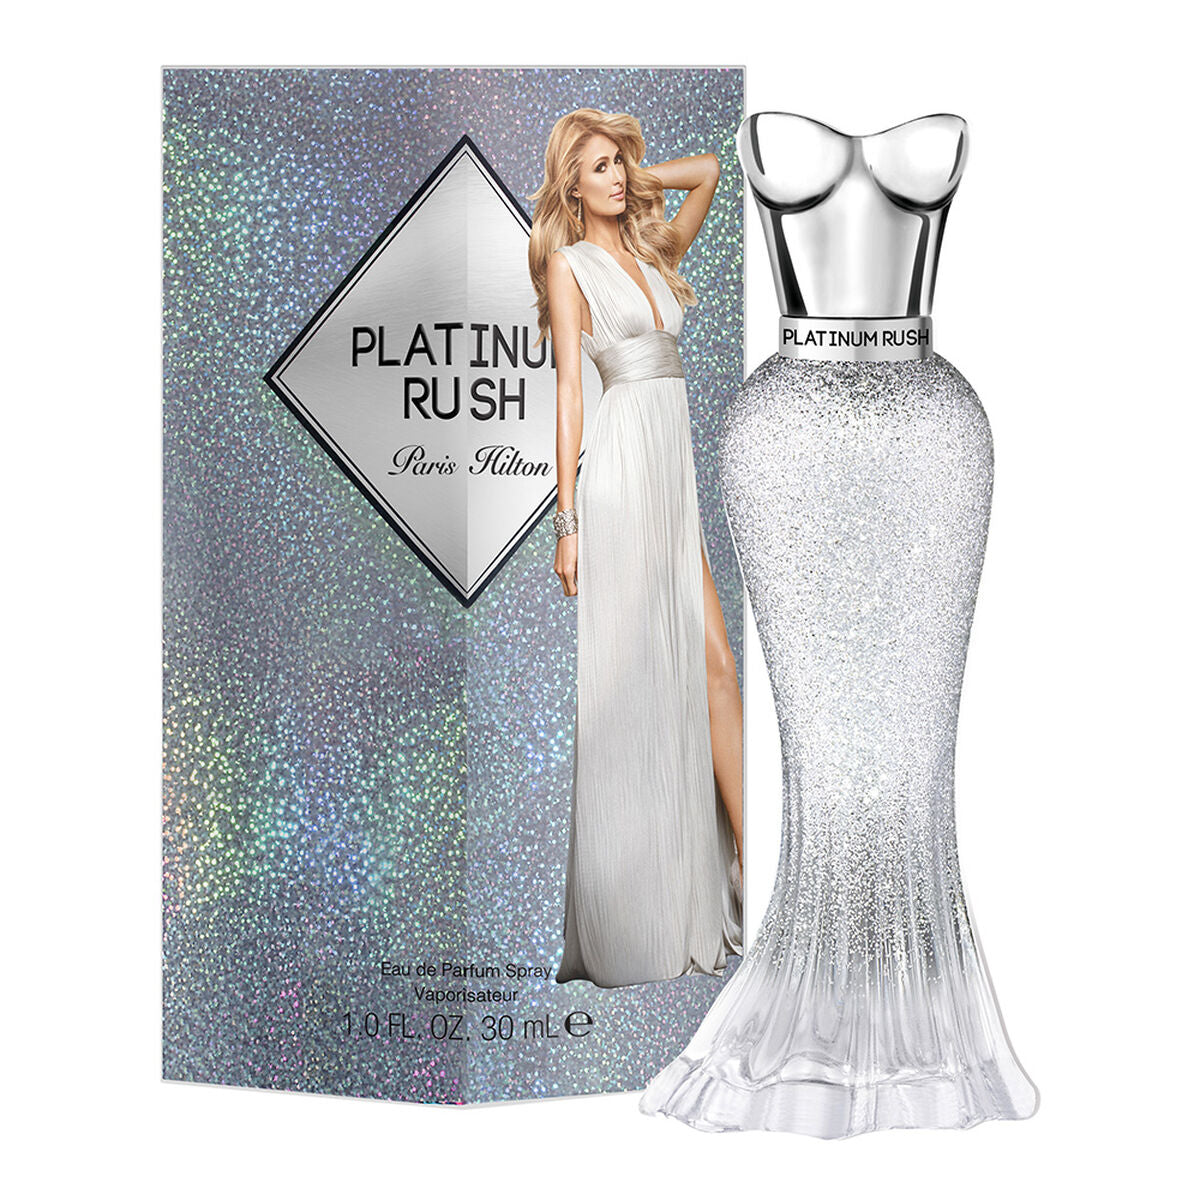 Platinum Rush Paris Hilton Edp 30Ml Mujer